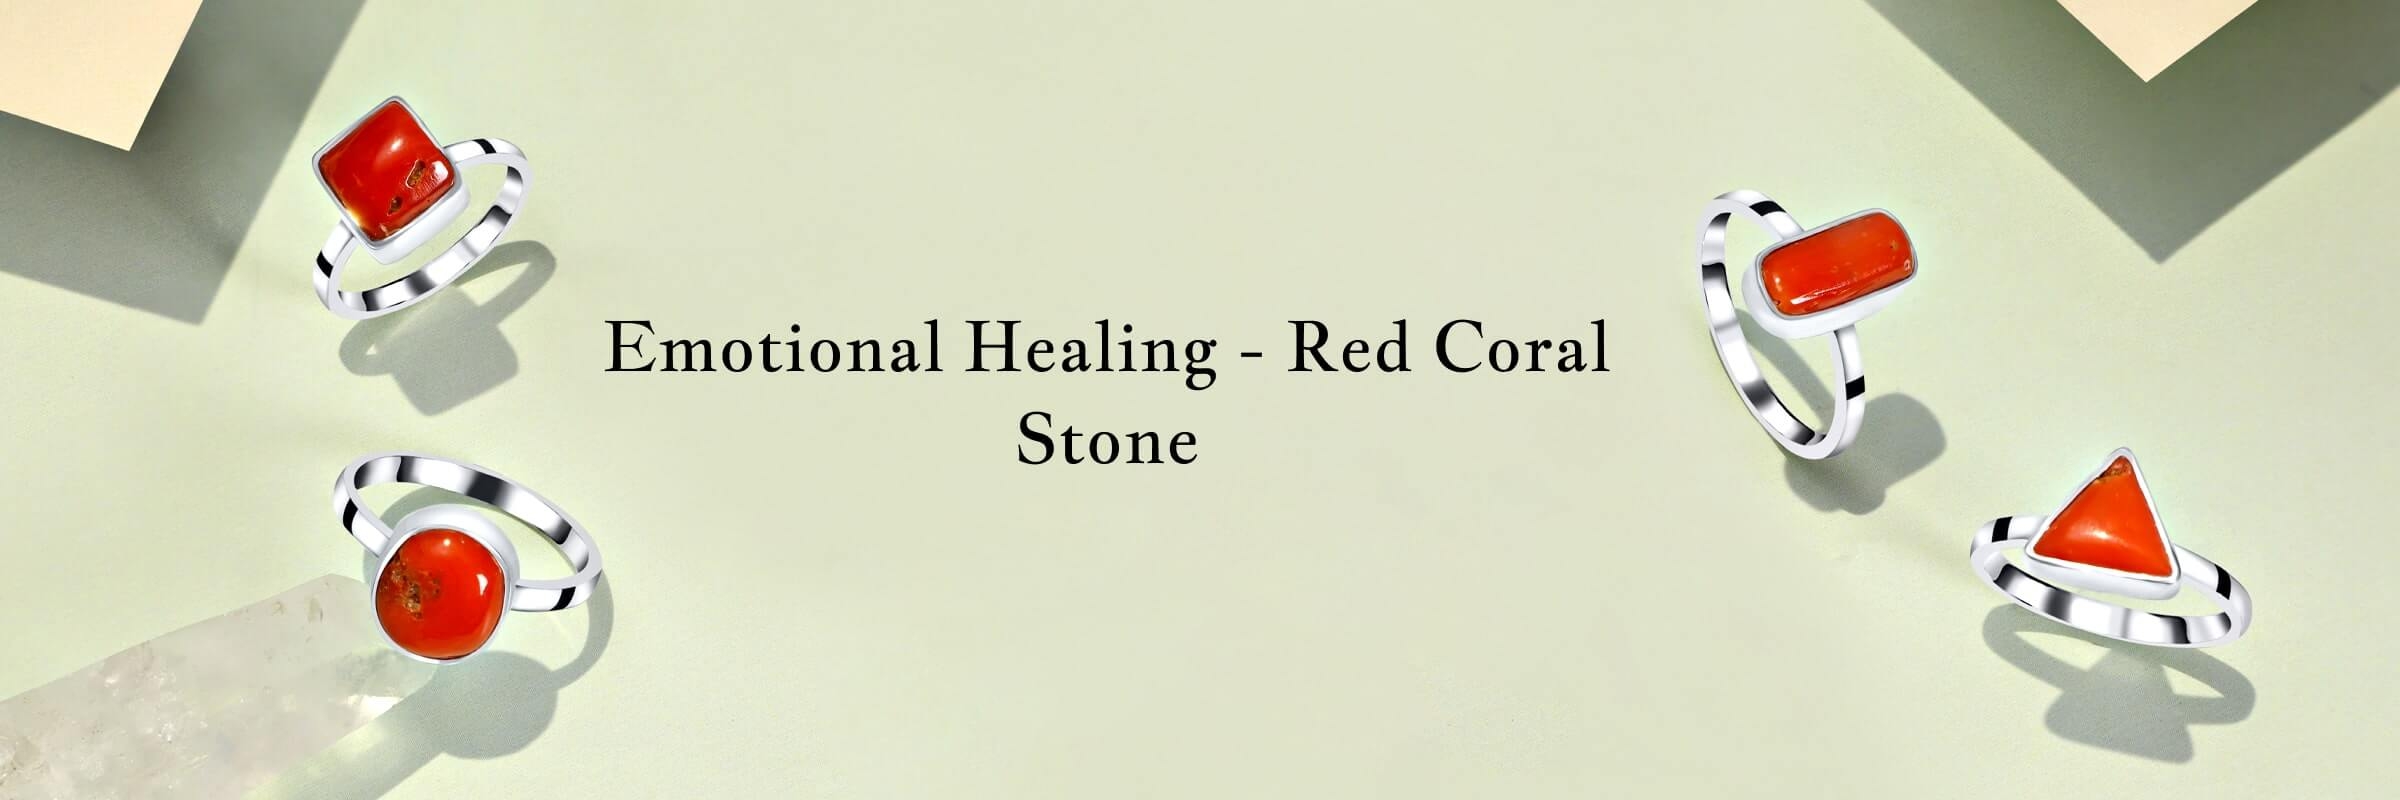 Red coral Emotional Healing Properties